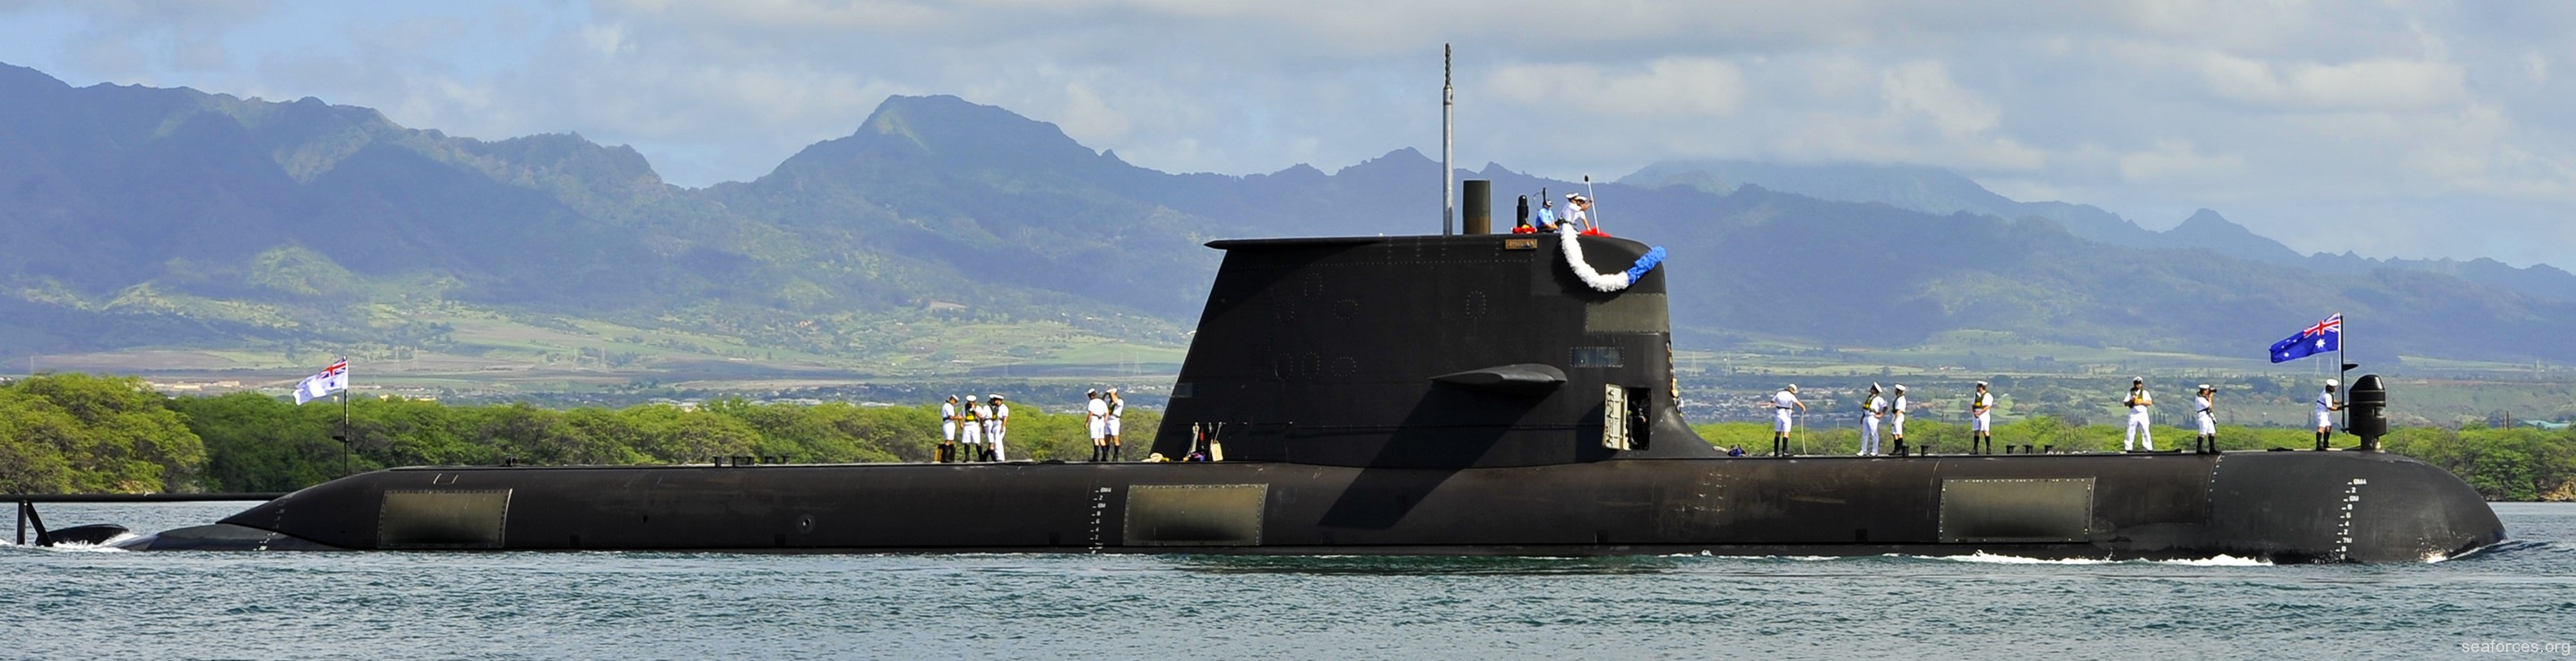 hmas sheean ssg-77 collins class attack submarine ssk royal australian navy 08